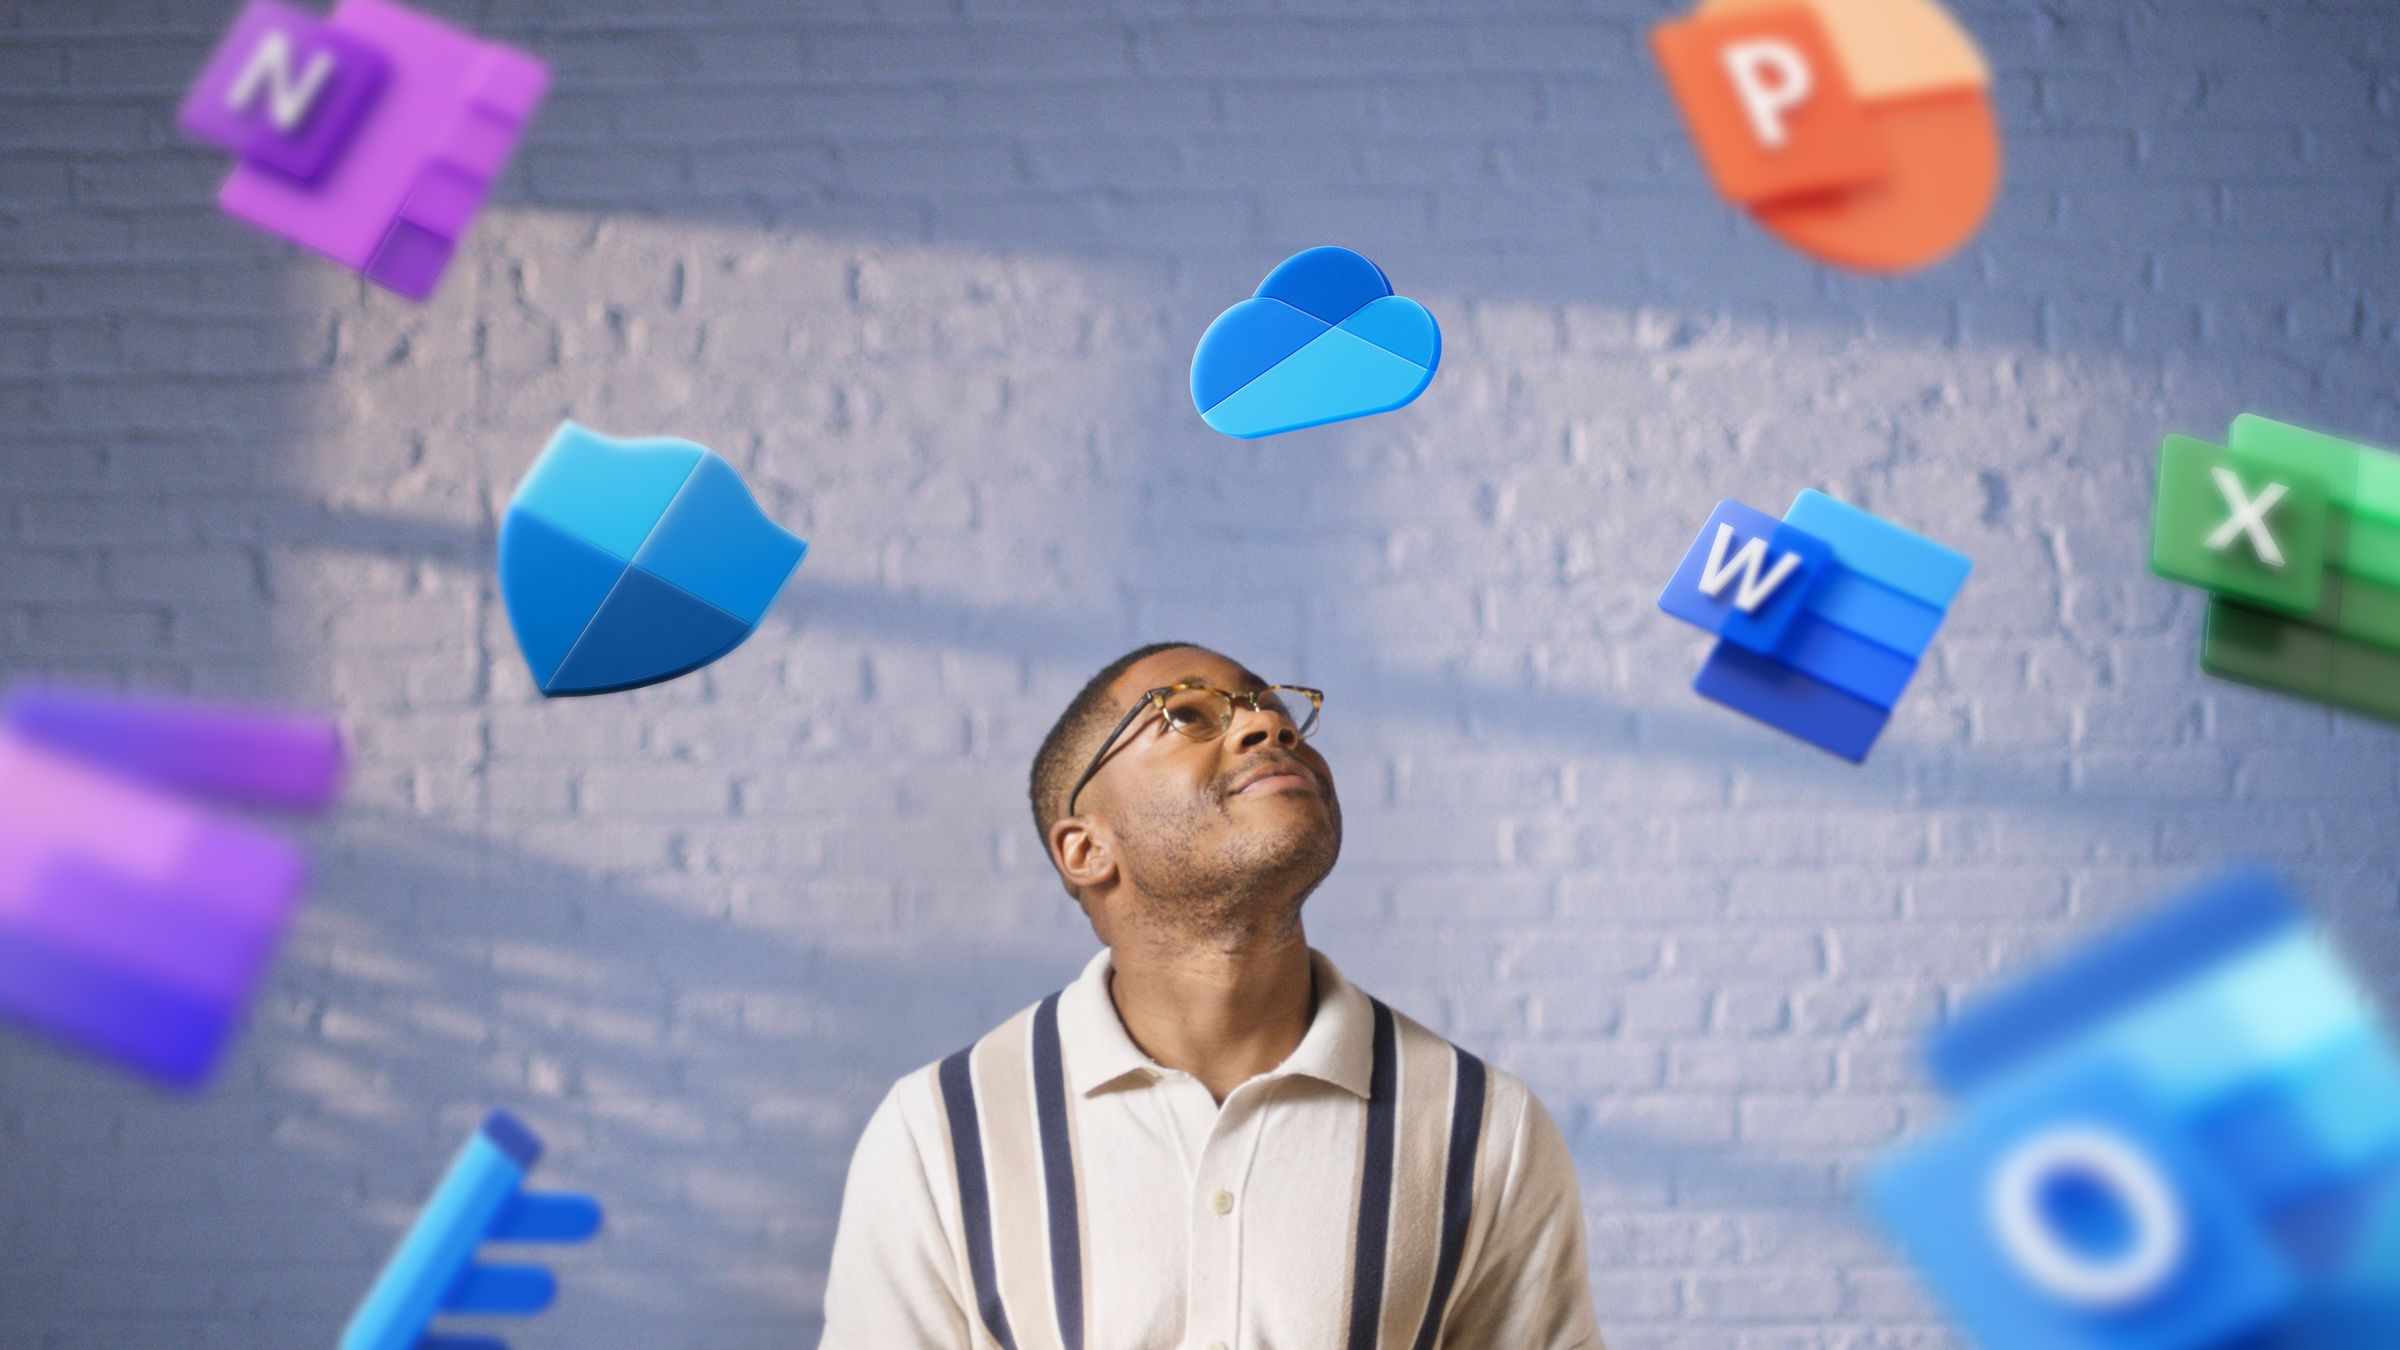 An illustration of the Microsoft 365 logo around a man